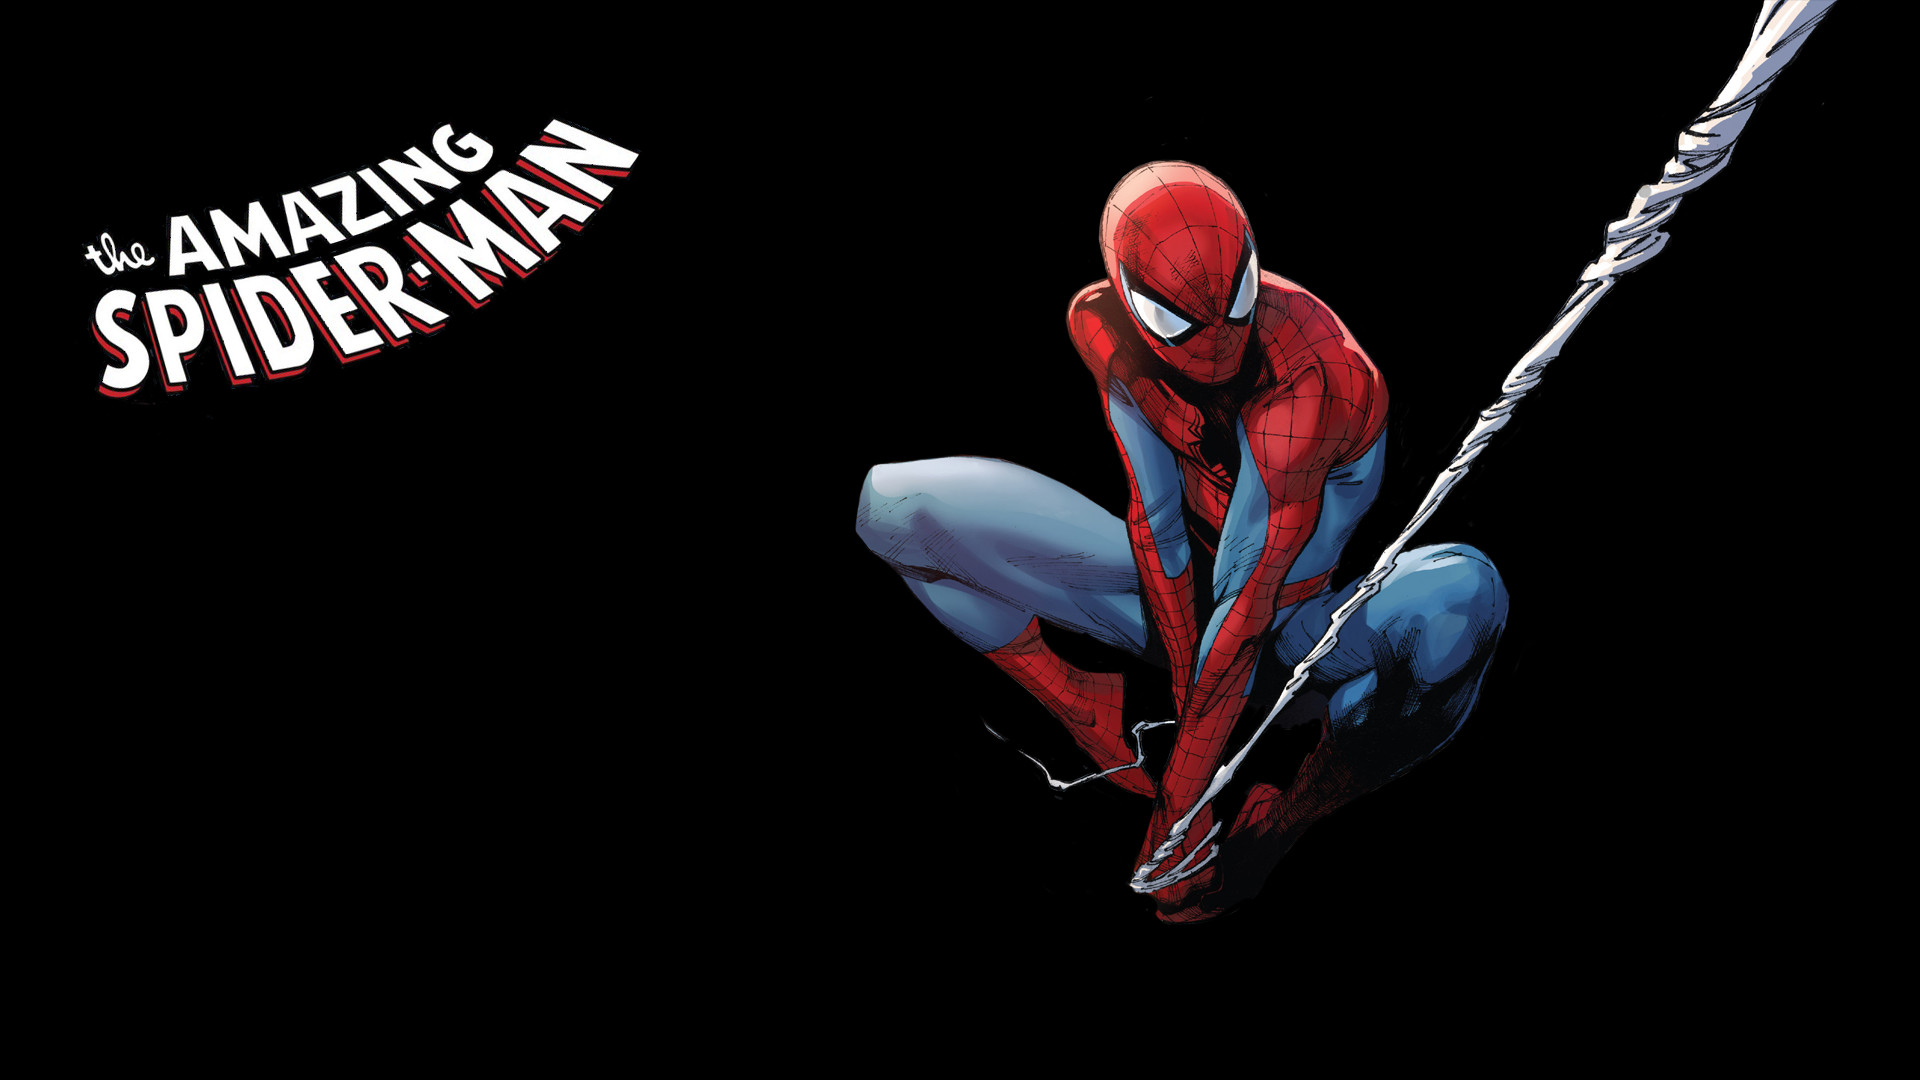 1920x1080 The Amazing Spider-Man Full HD Wallpaper